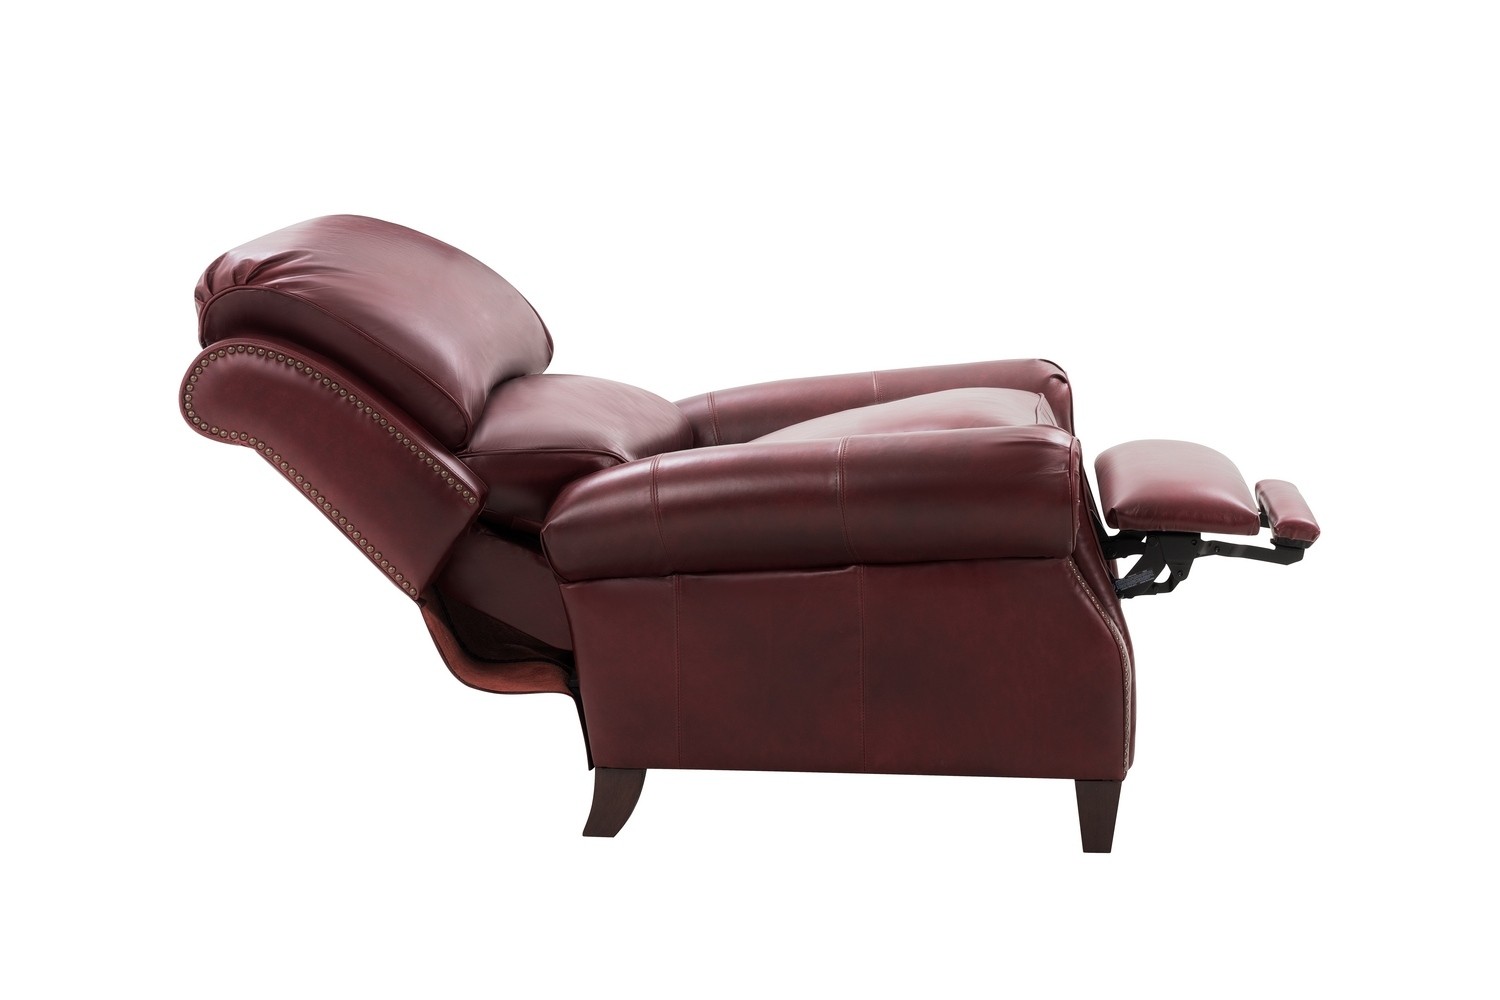 Barcalounger Churchill Recliner Chair - Emerson Sangria/Top Grain Leather